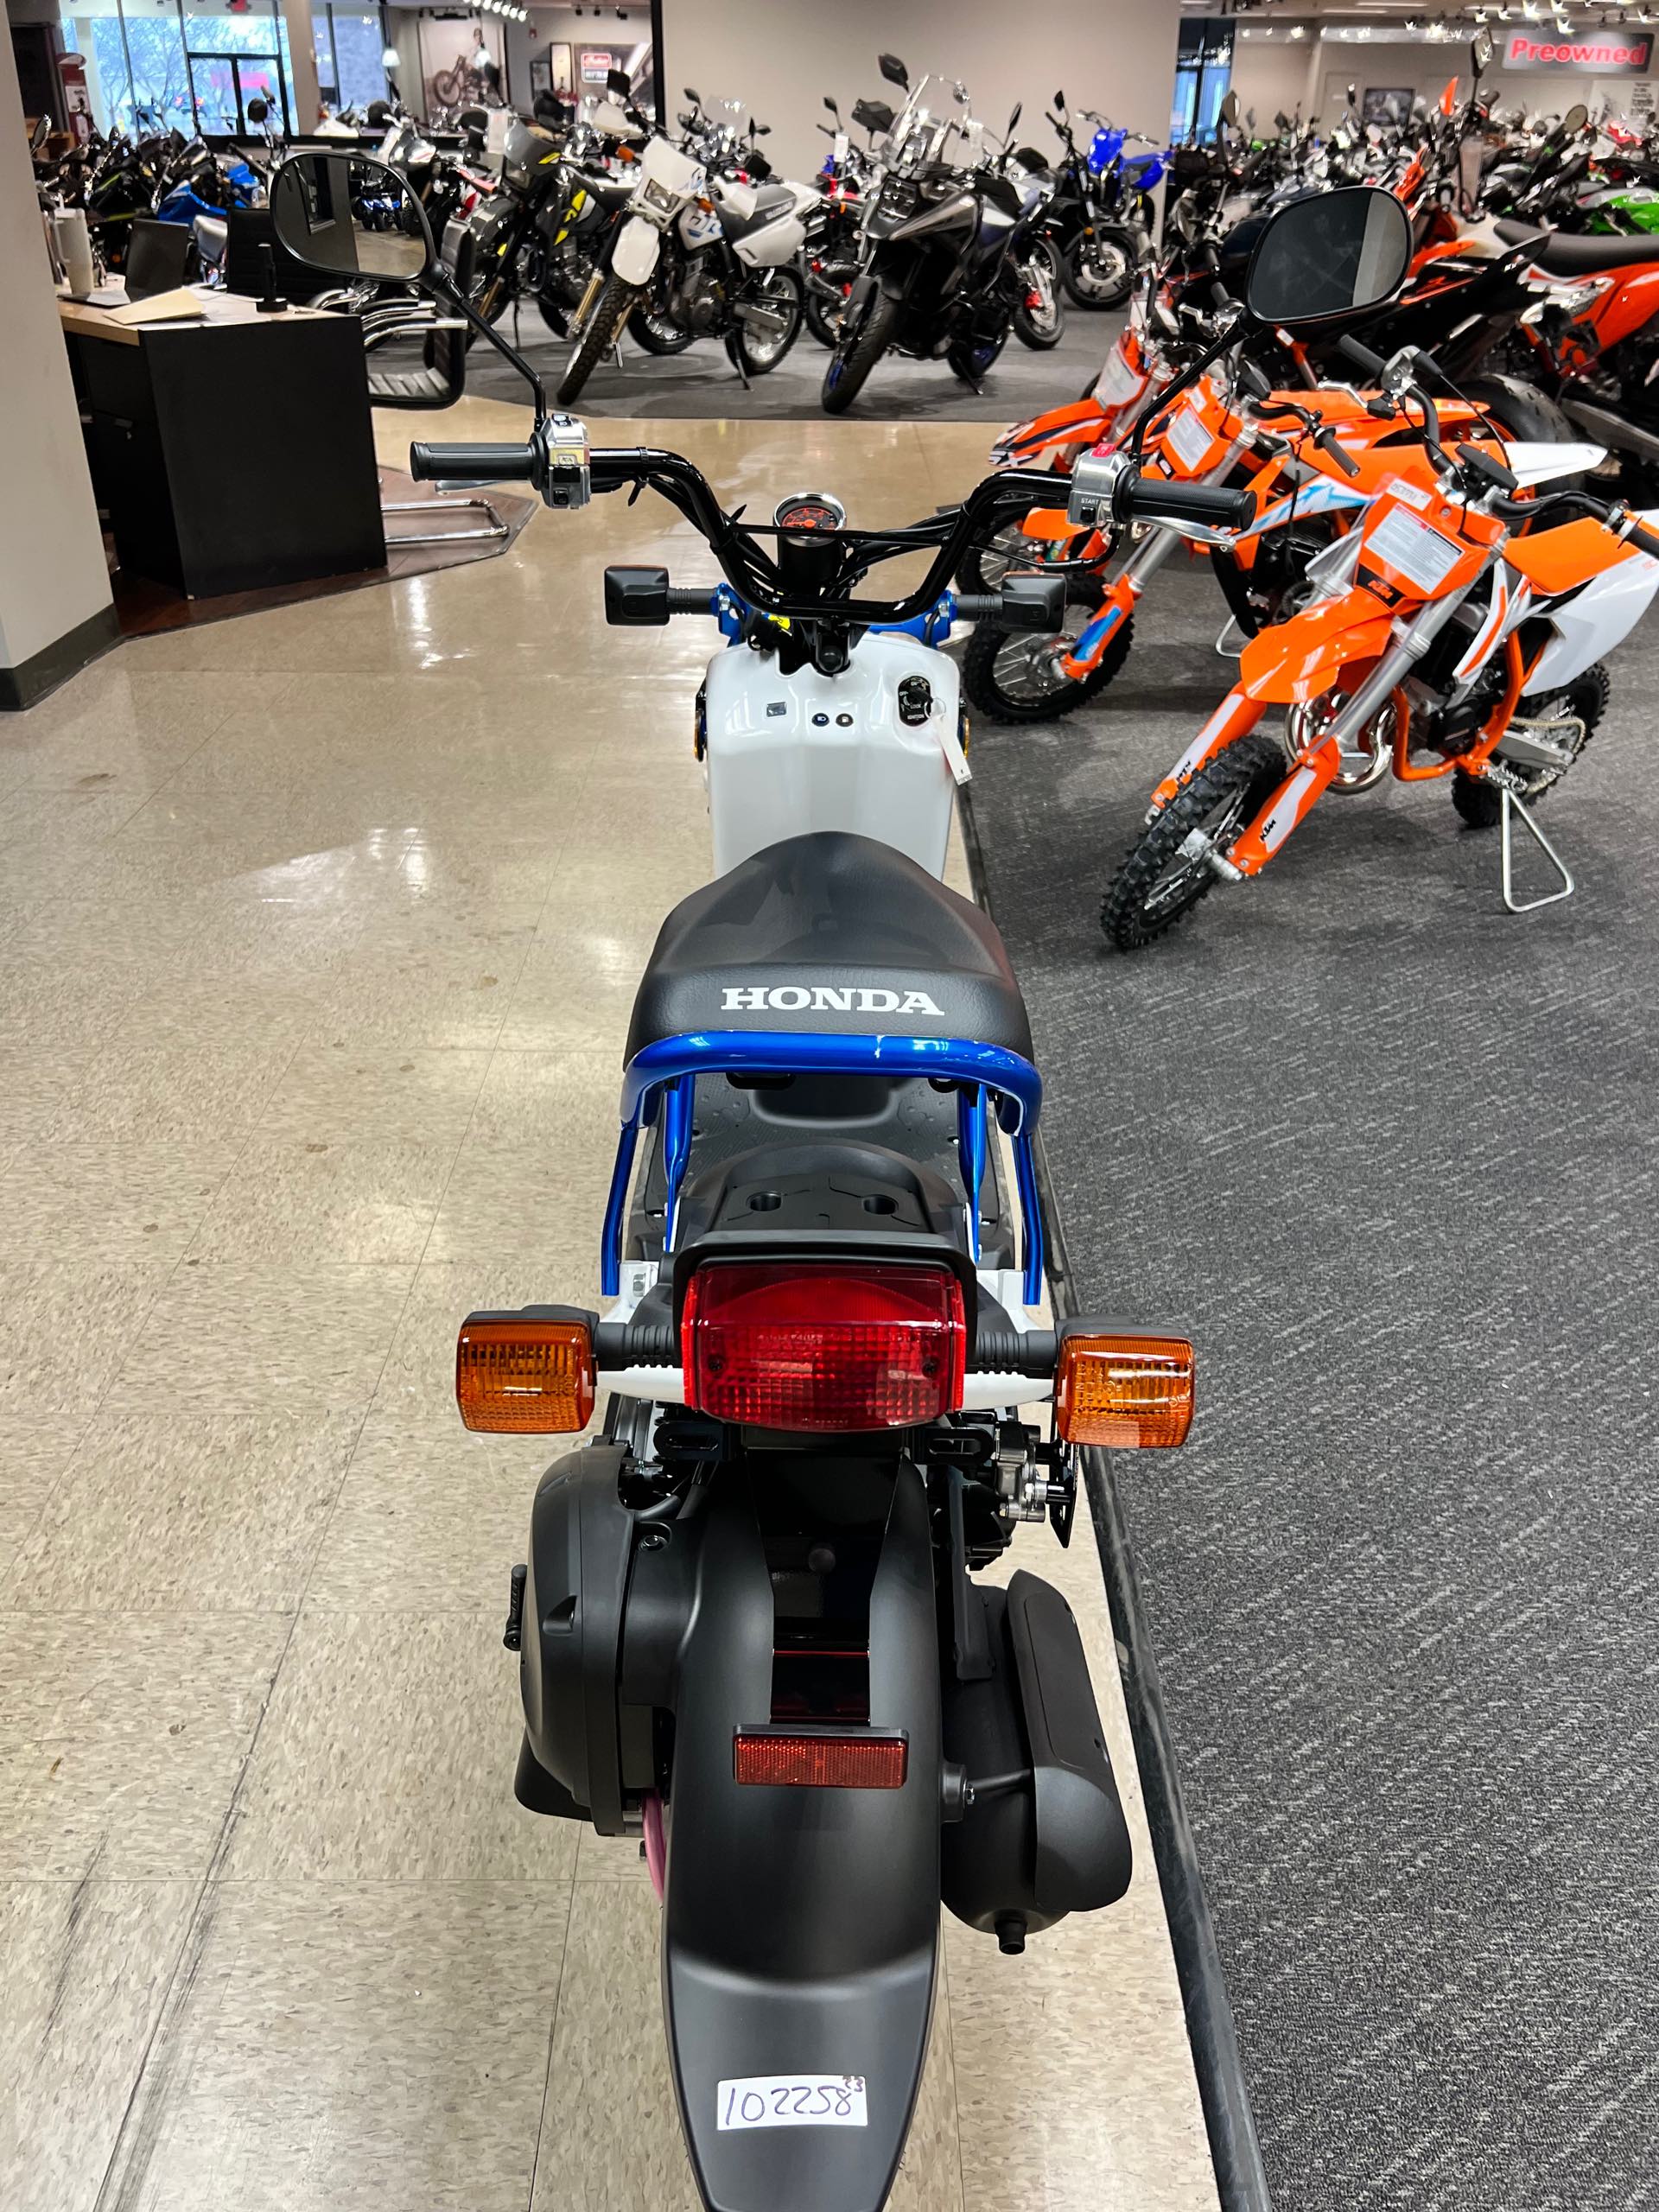 2023 Honda Ruckus Base at Sloans Motorcycle ATV, Murfreesboro, TN, 37129